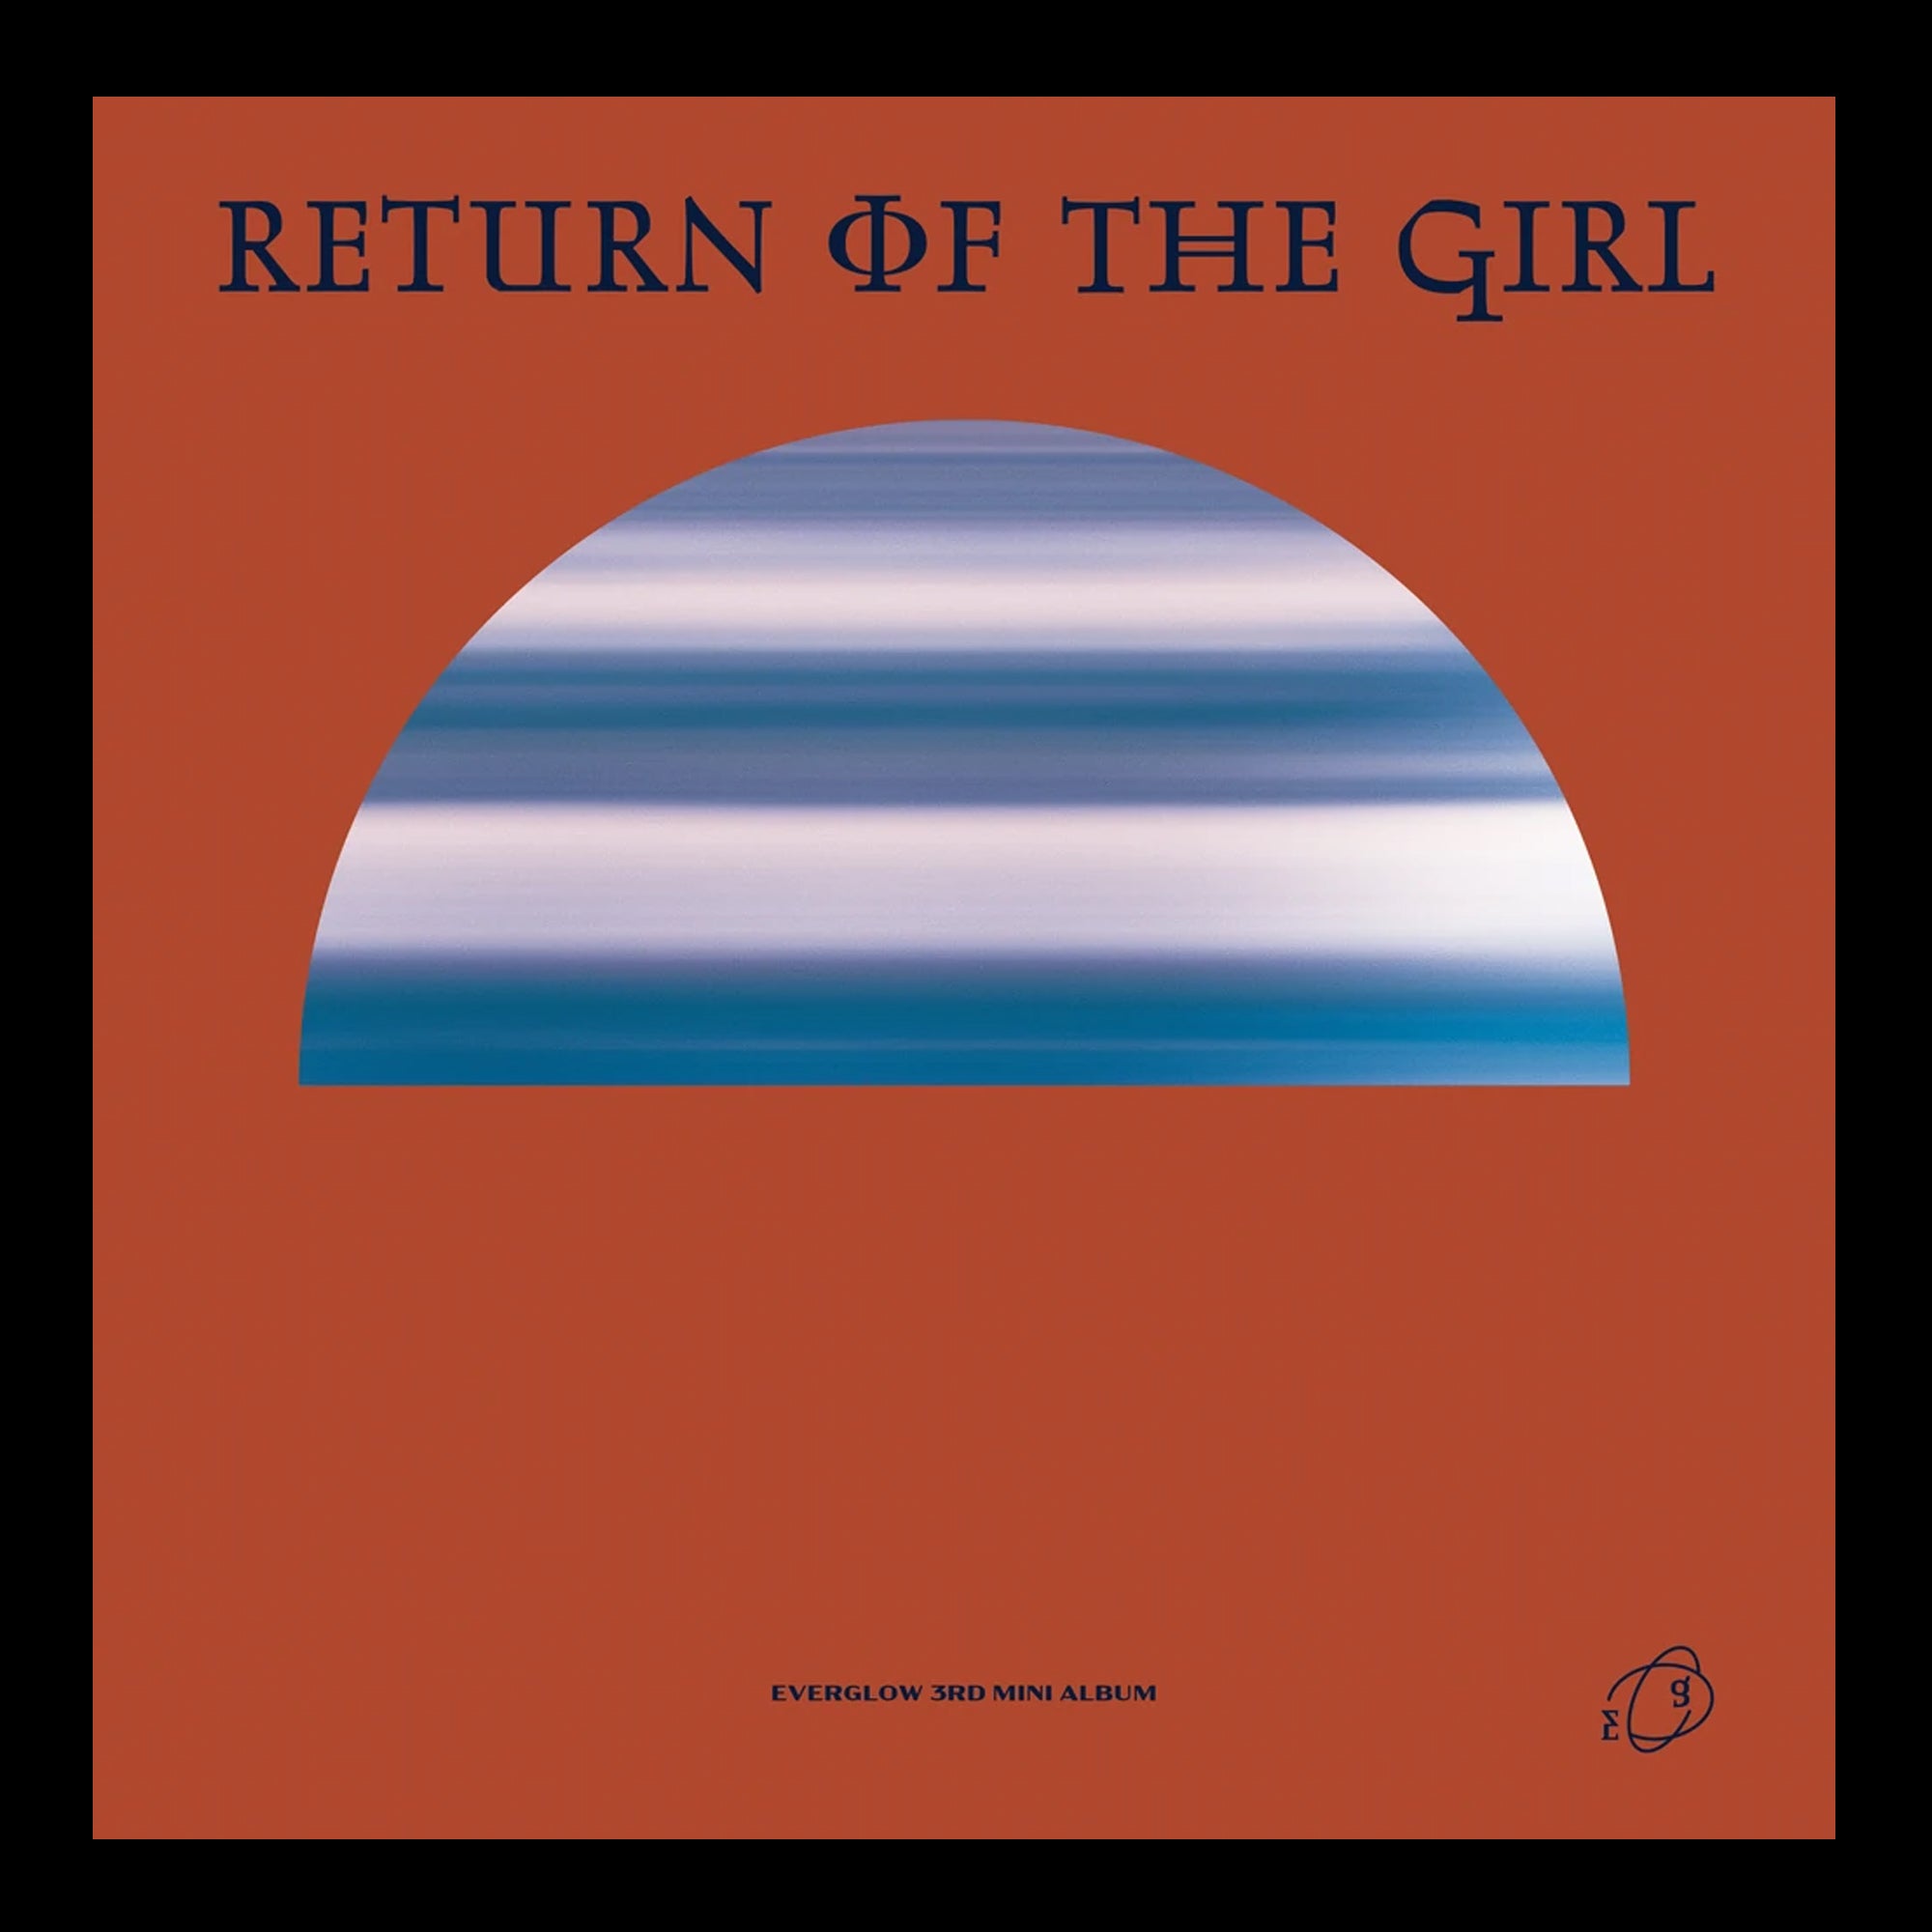 EVERGLOW - Return of the girl